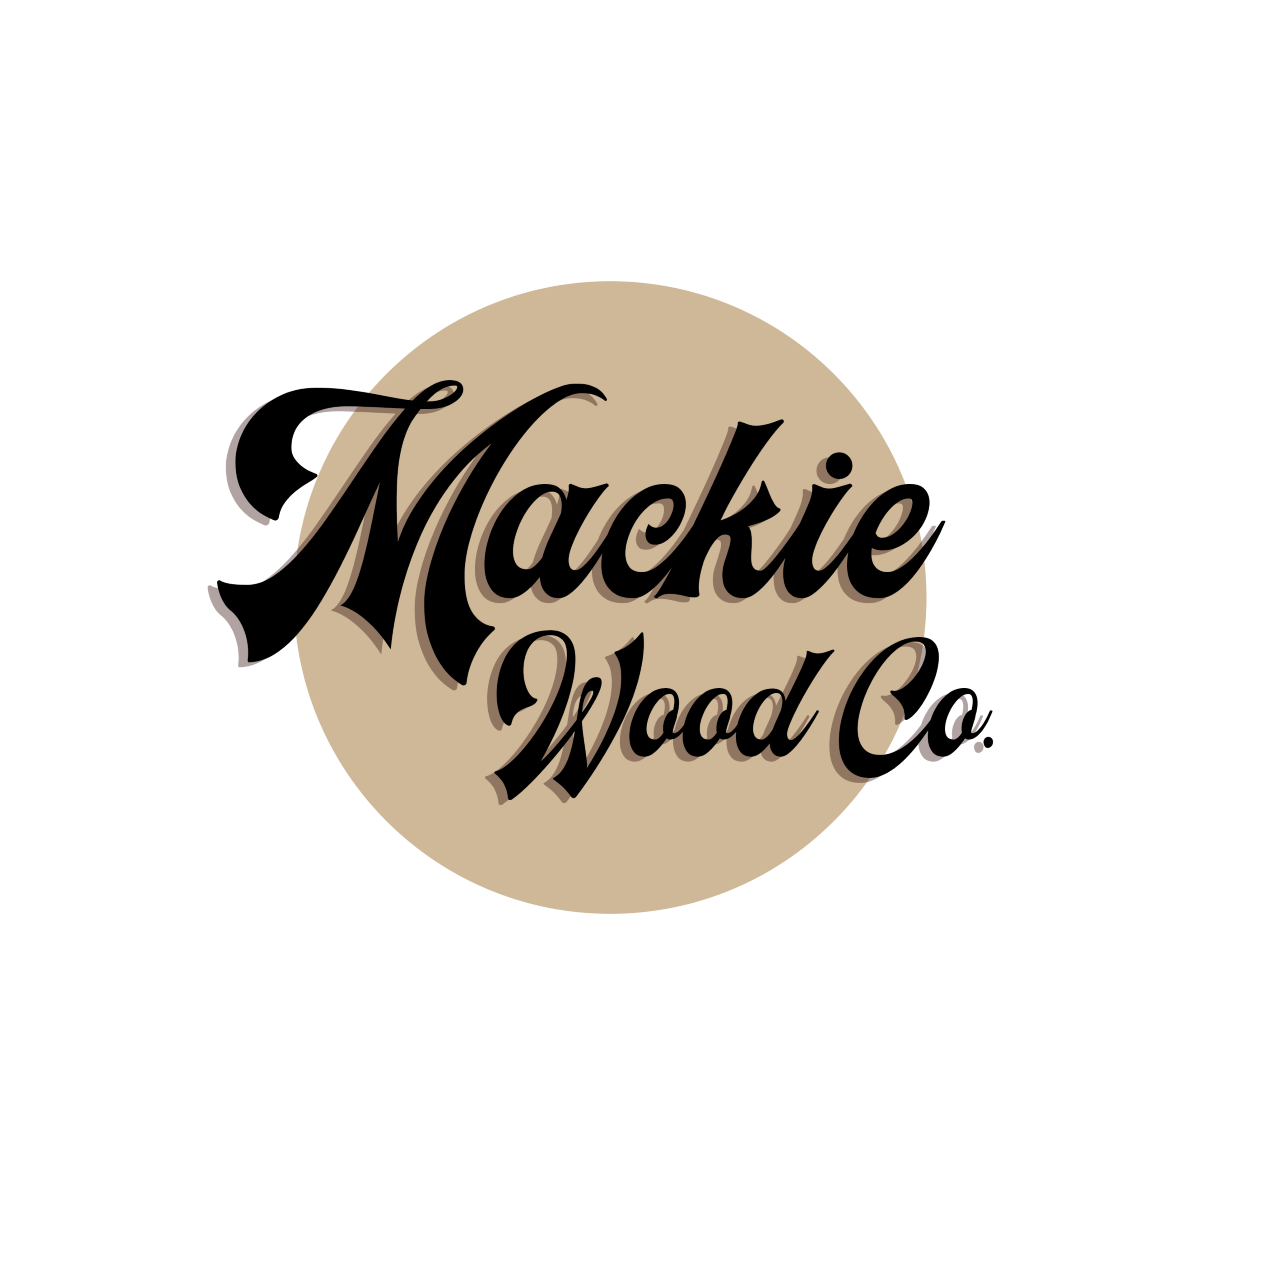 Mackie Wood Co